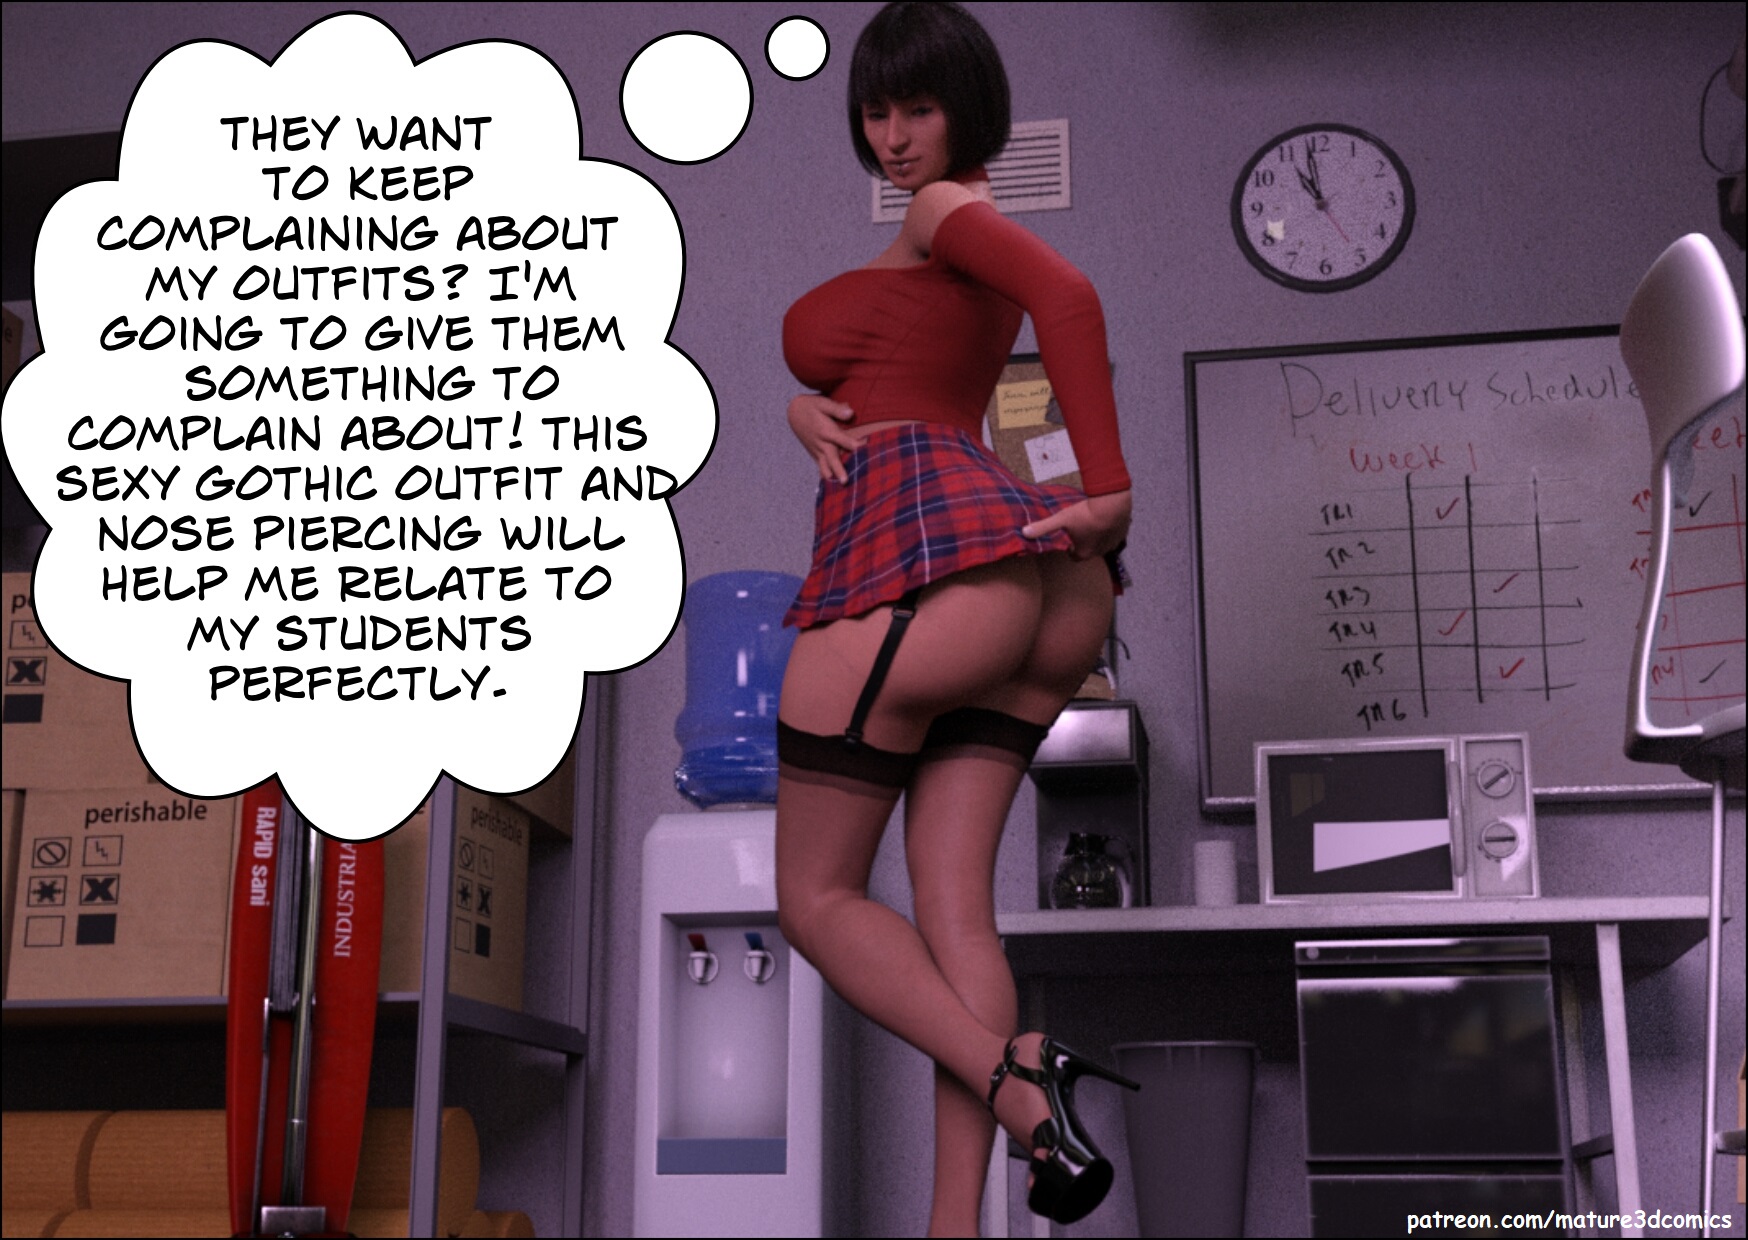 Mature3dcomics - Sexy Teacher Captions - Porn Comics Galleries